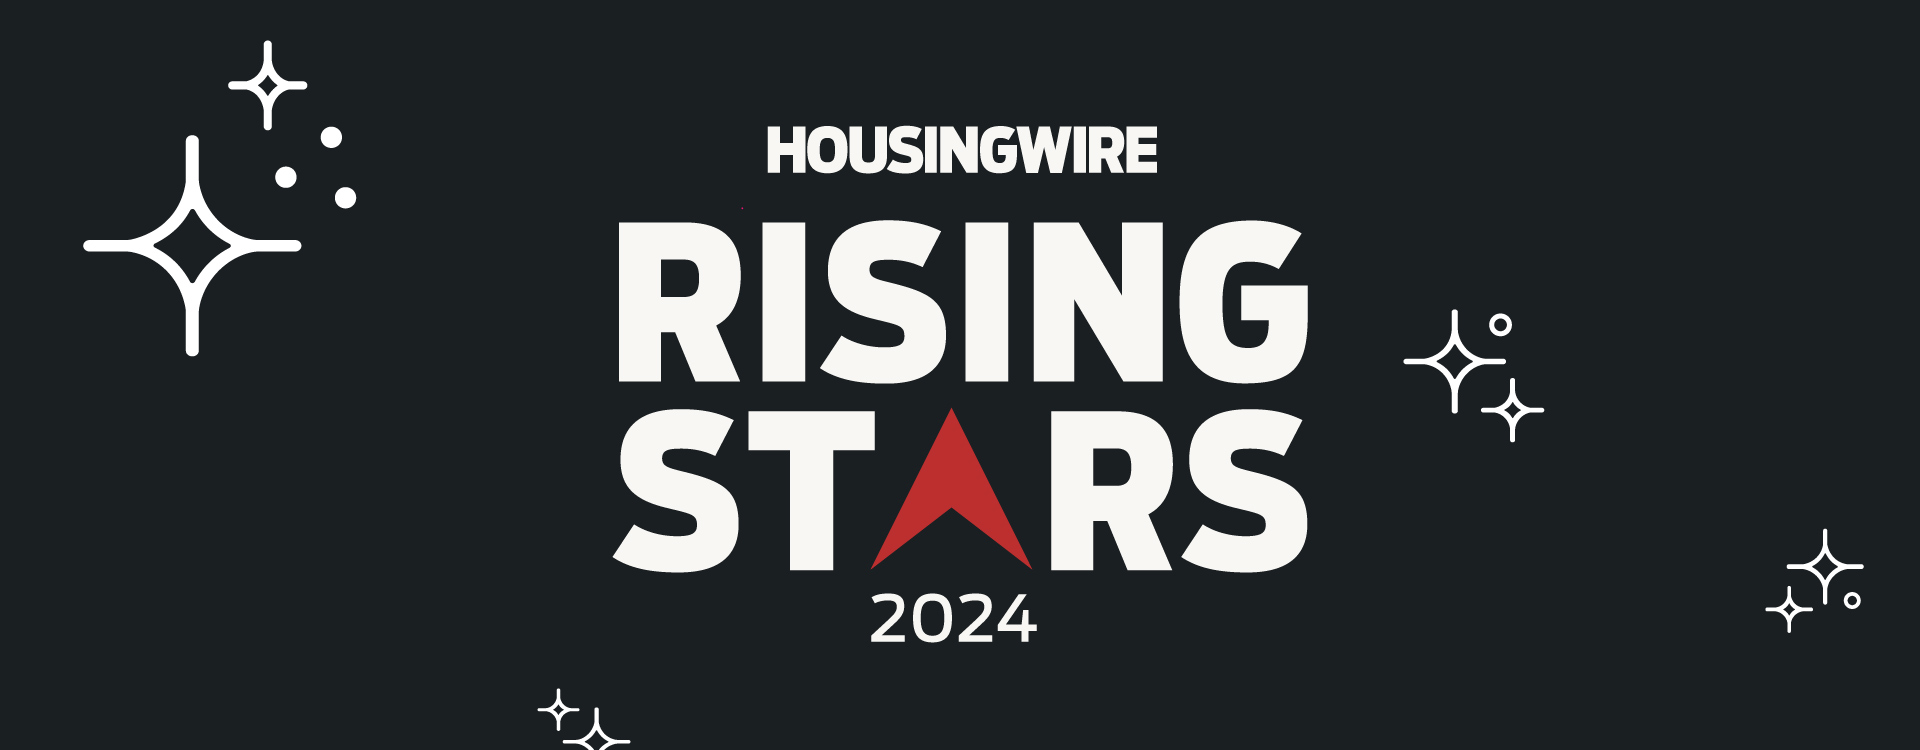 HW Rising Stars Program Overview - HousingWire